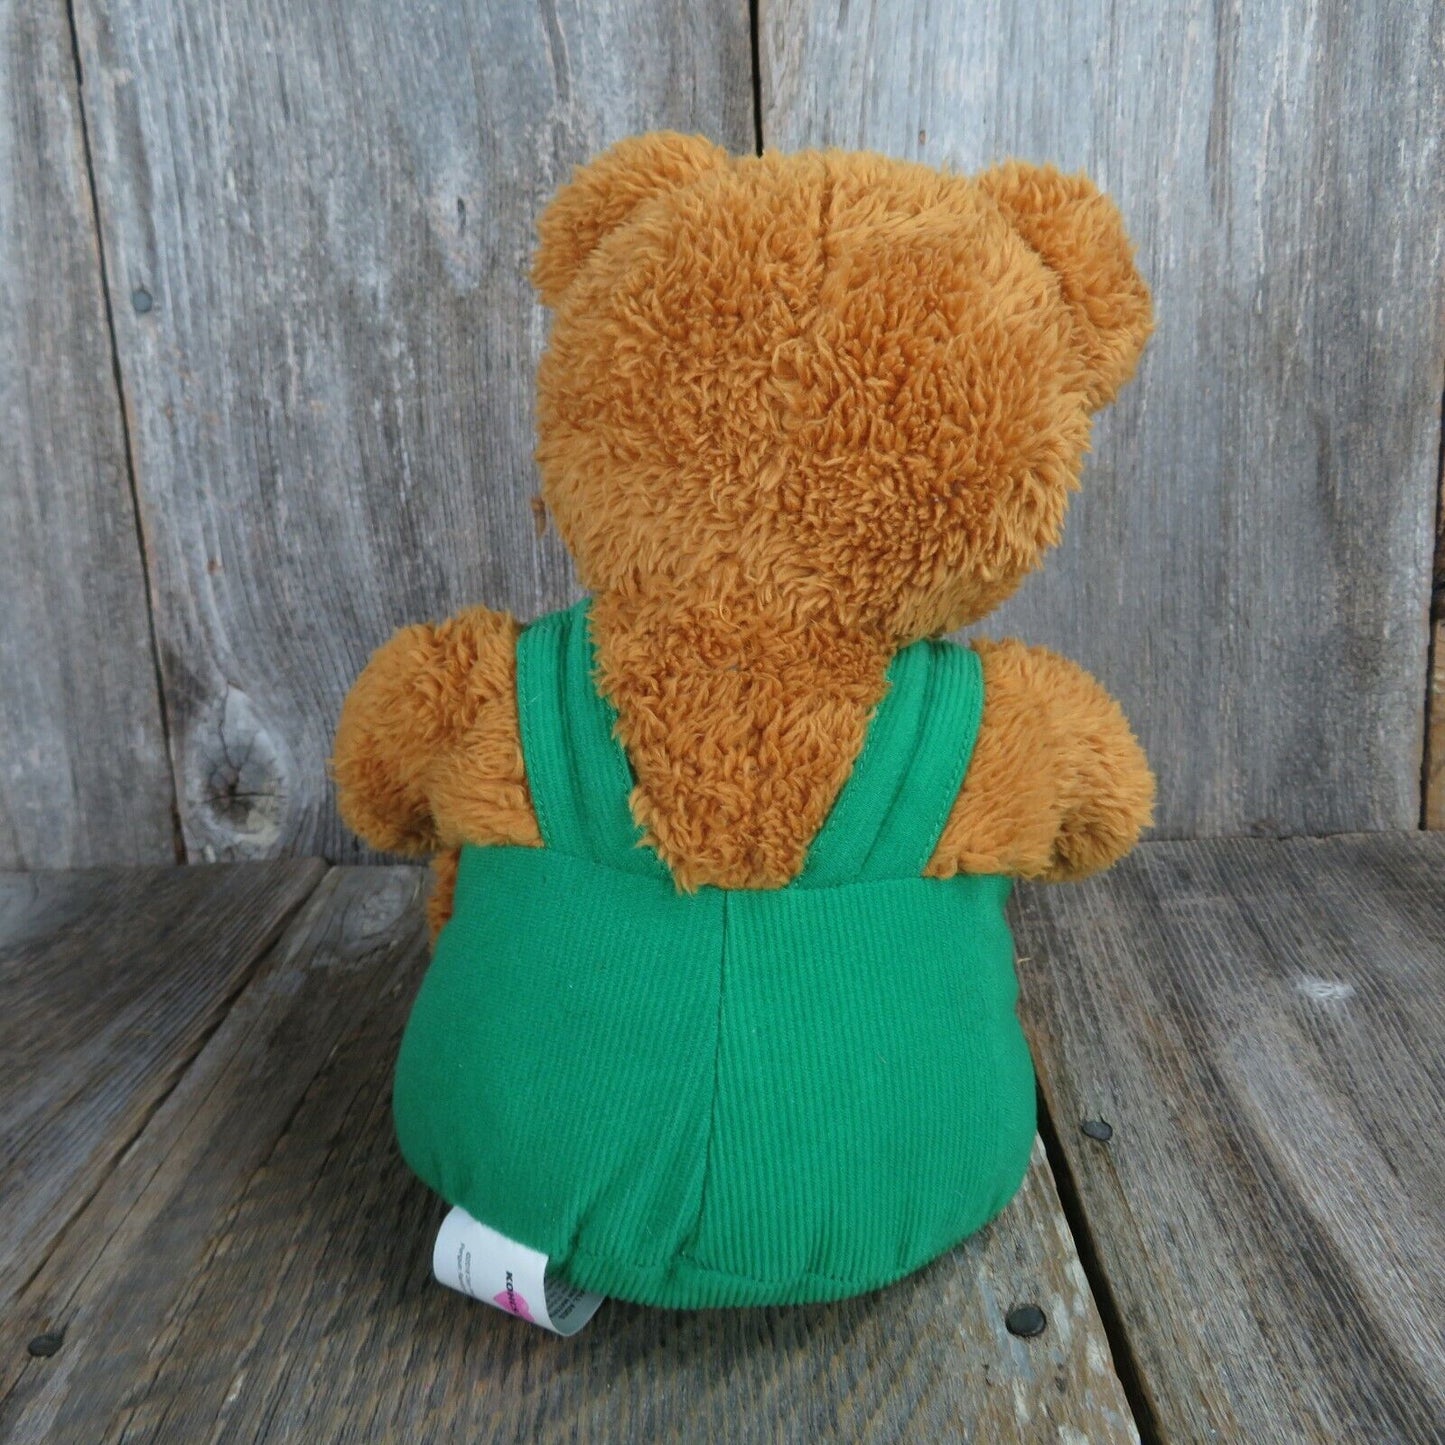 Kohls Cares Corduroy Teddy Bear Green Overalls Plush Stuffed Animal Toy 2016